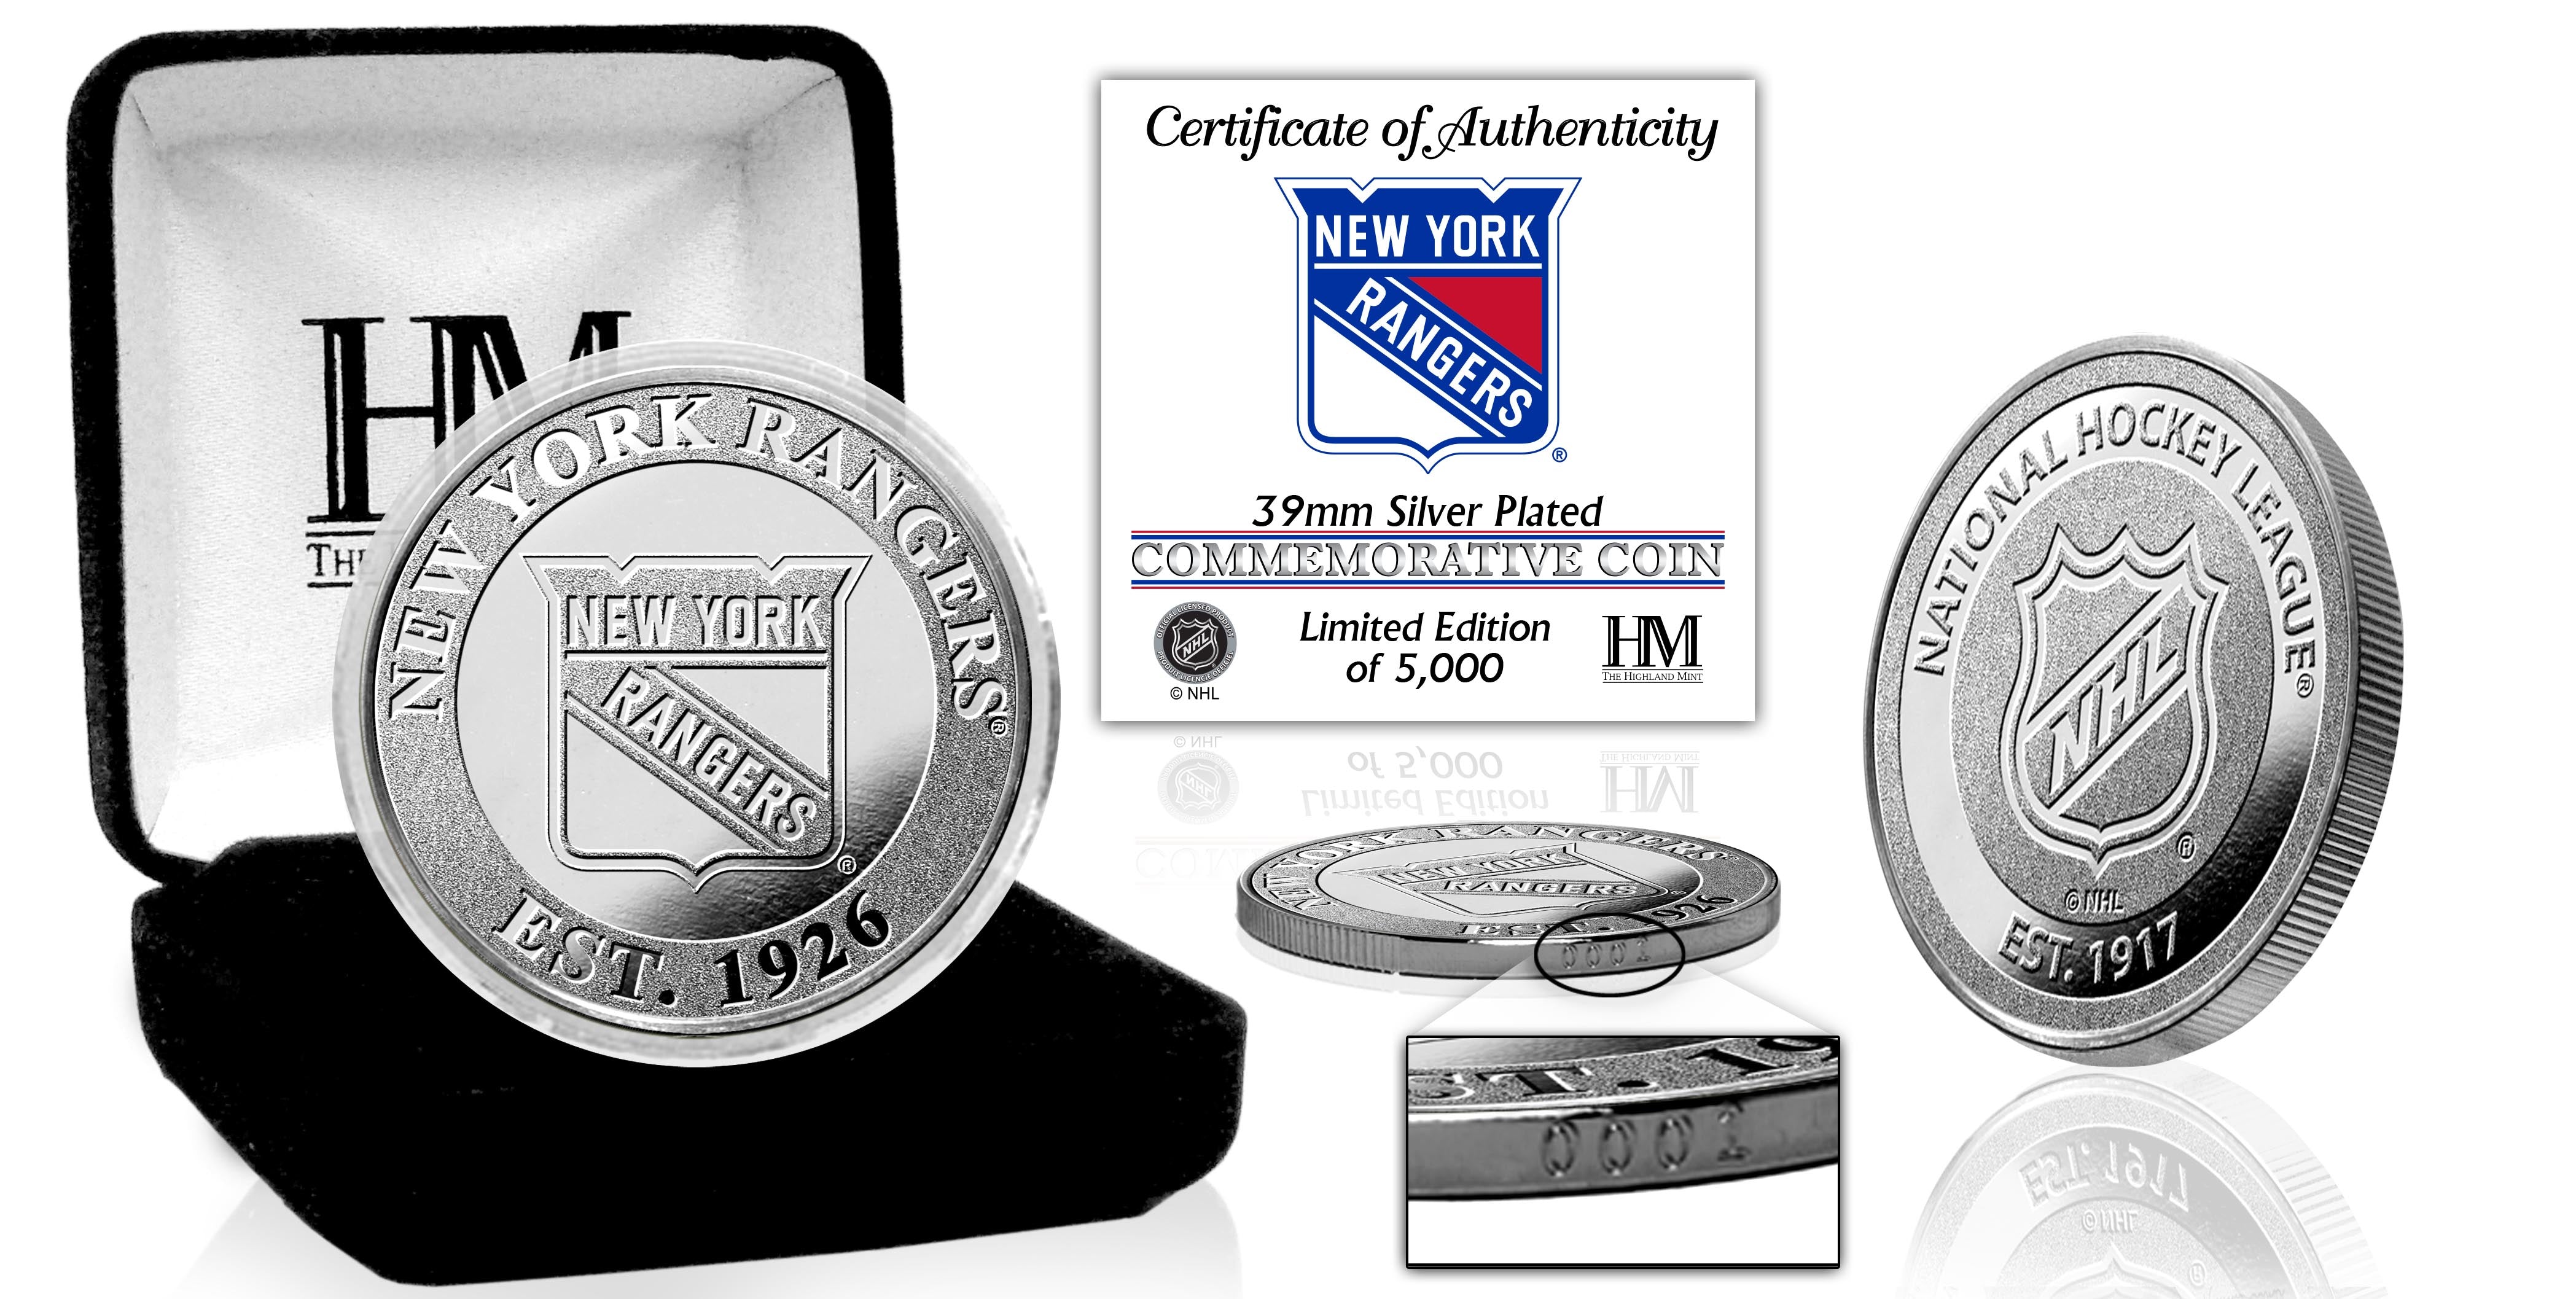 New York Rangers Silver Mint Coin